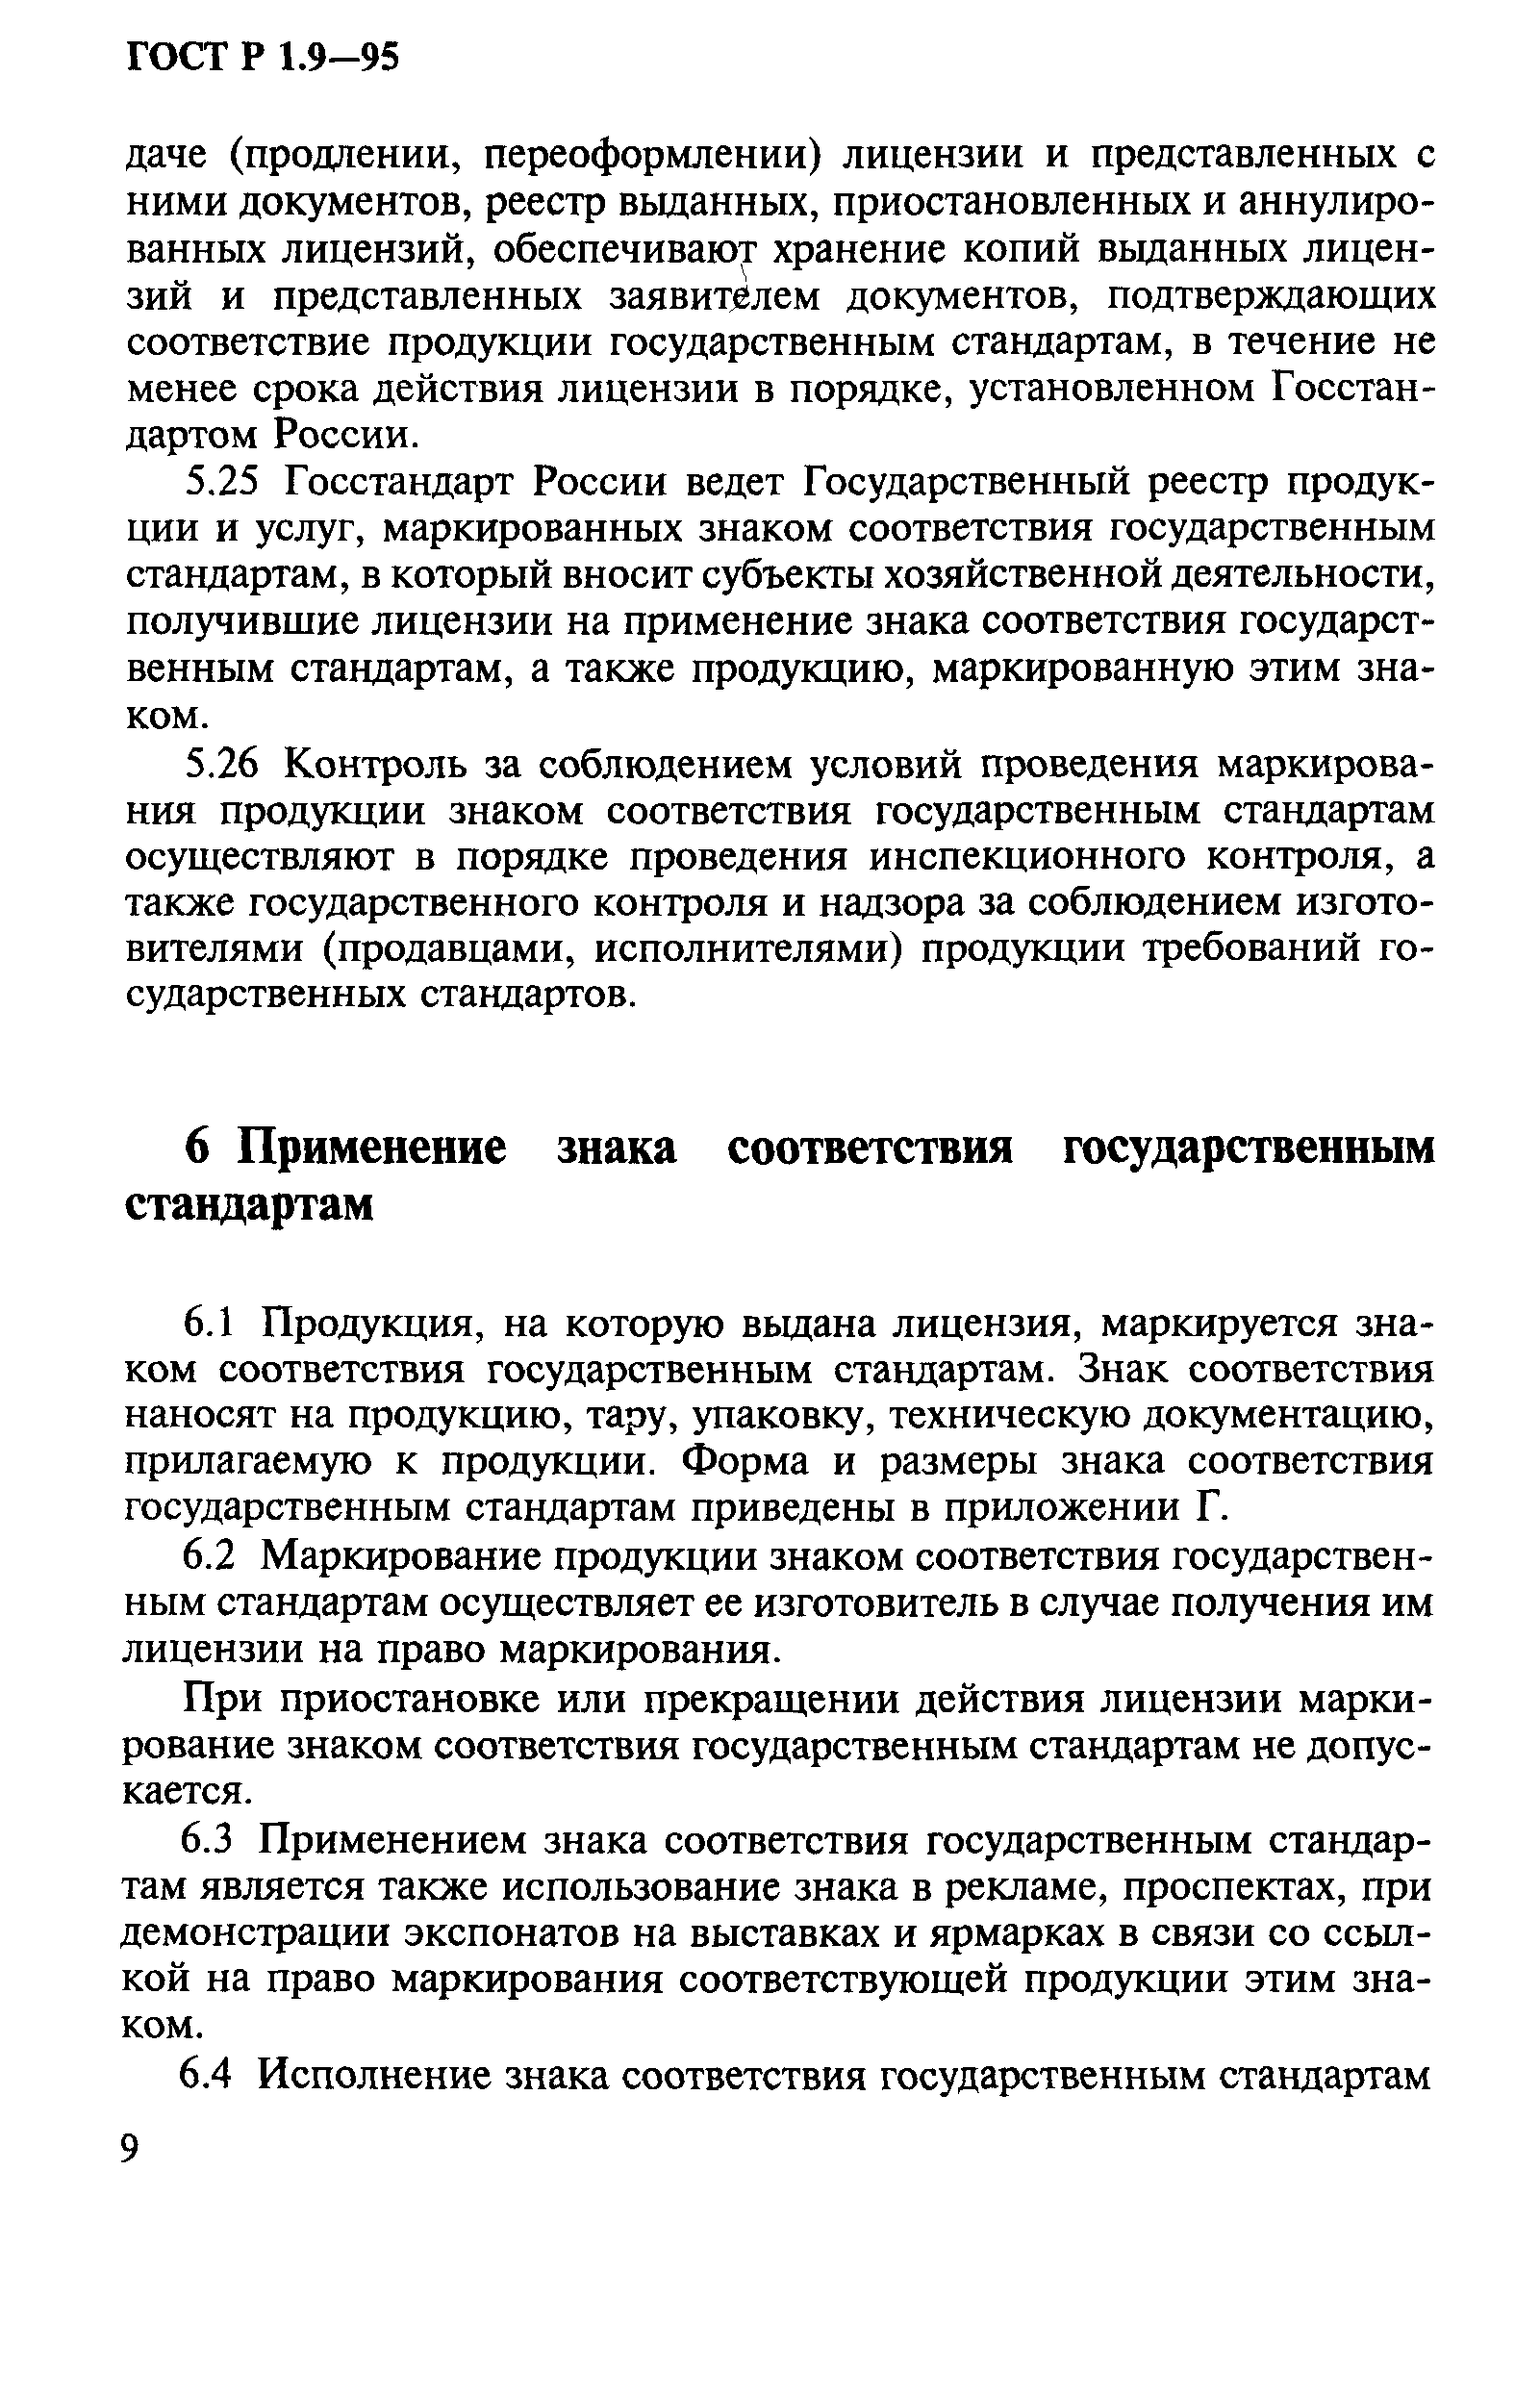 ГОСТ Р 1.9-95